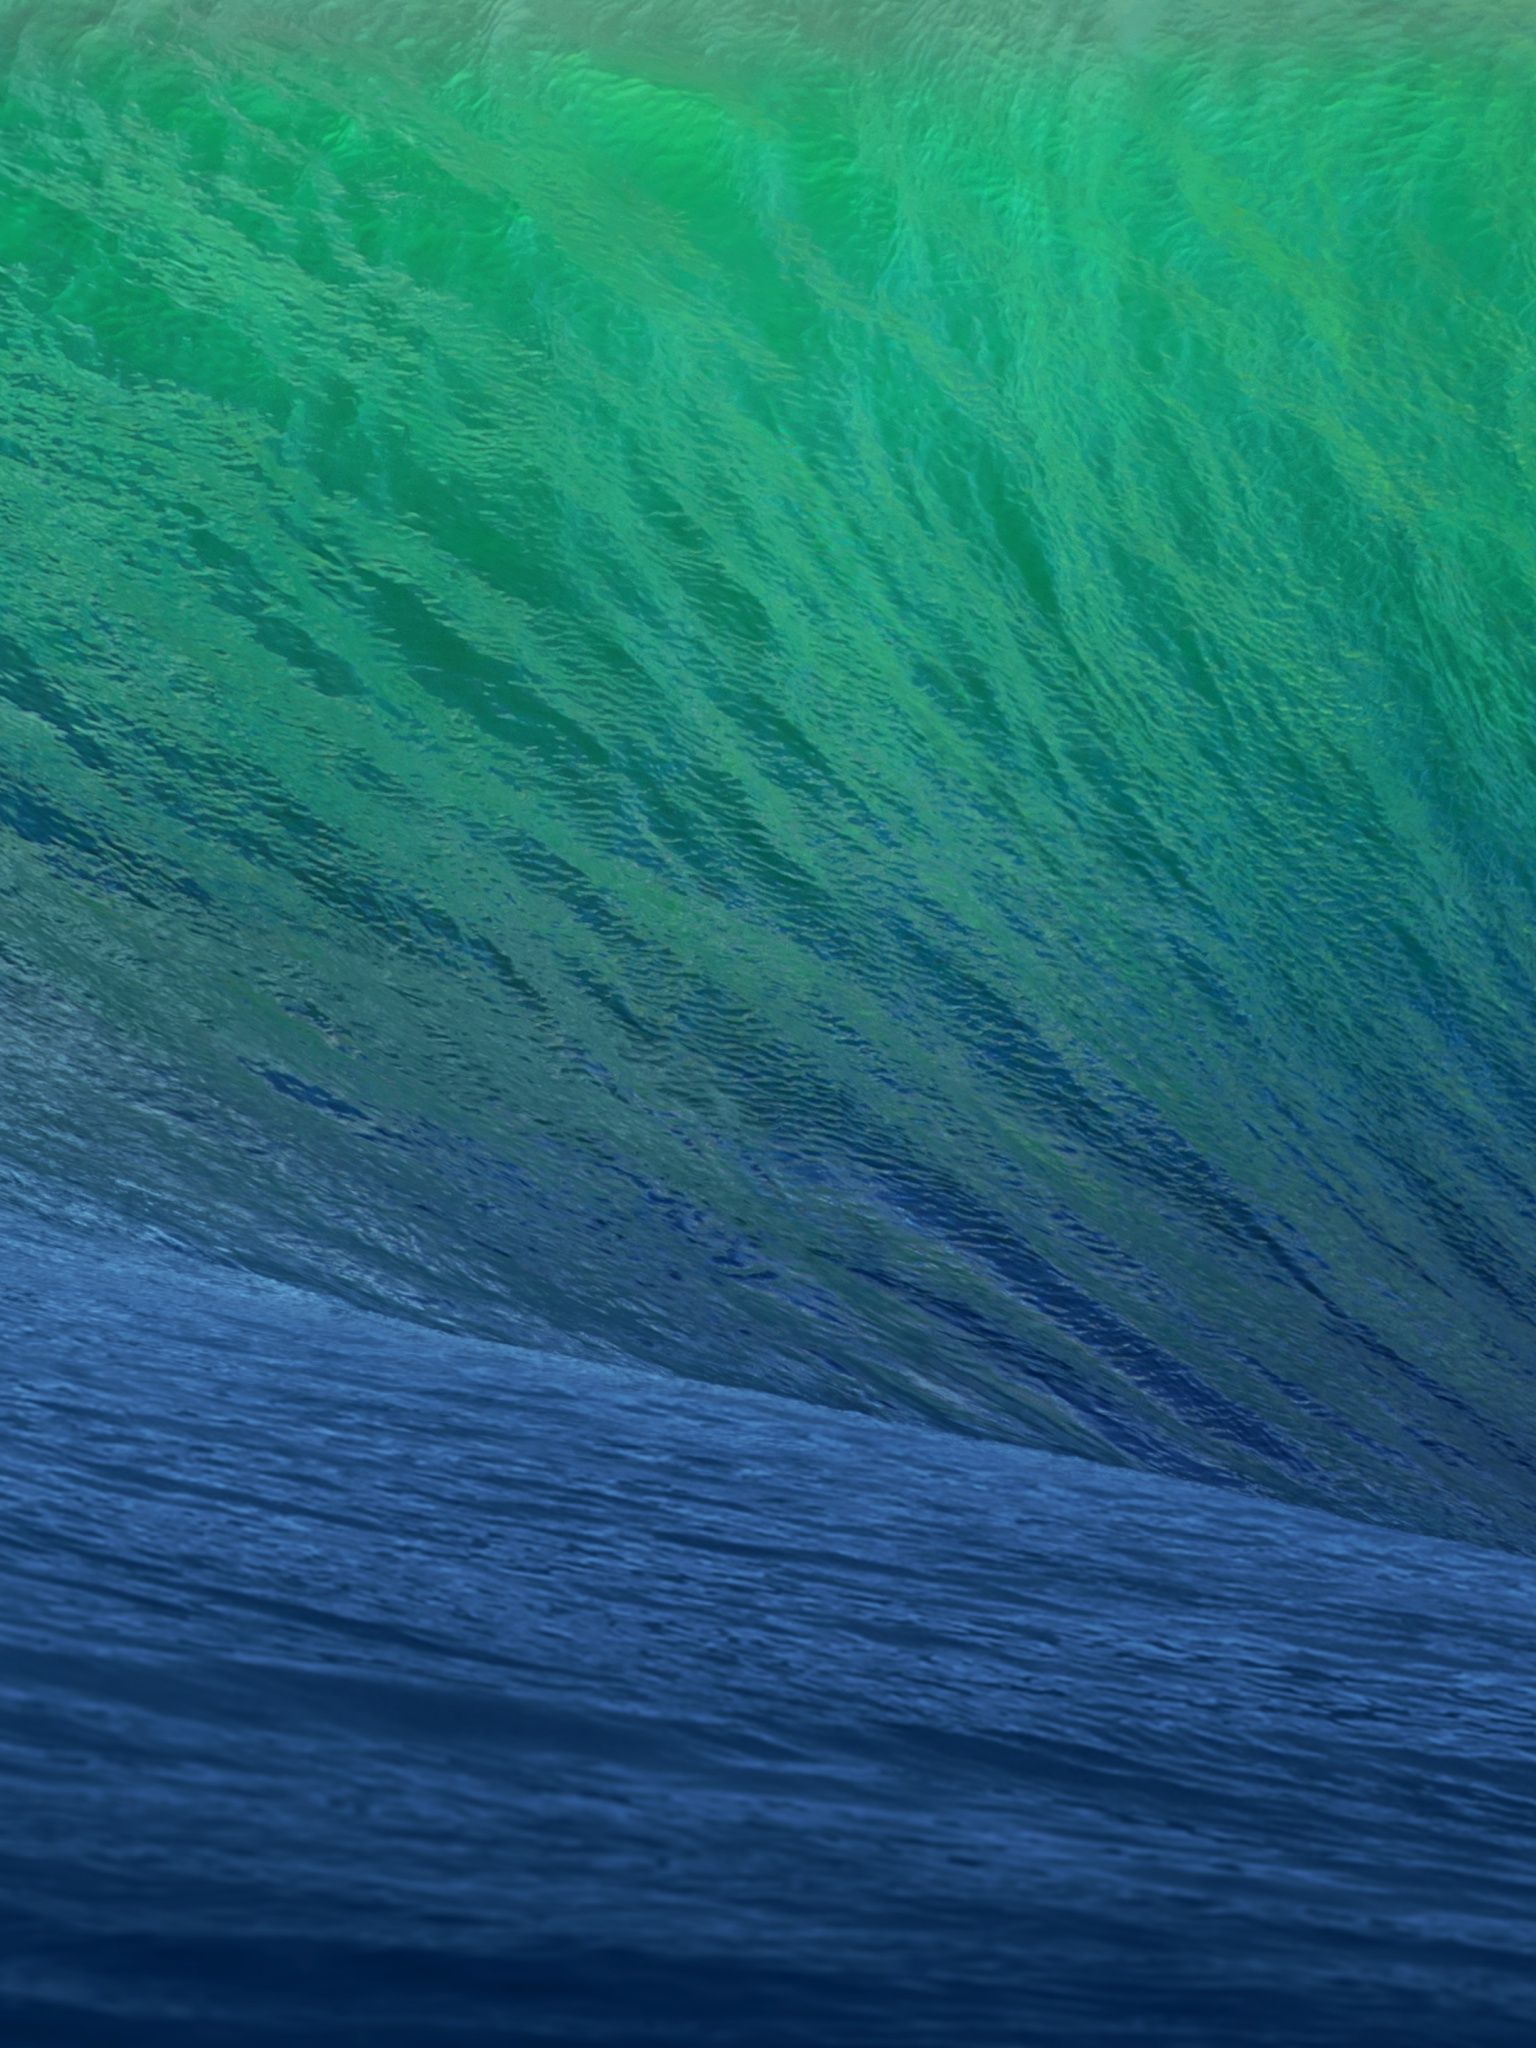 1536x2048 OS X Mavericks Wave Ipad 4 wallpaper